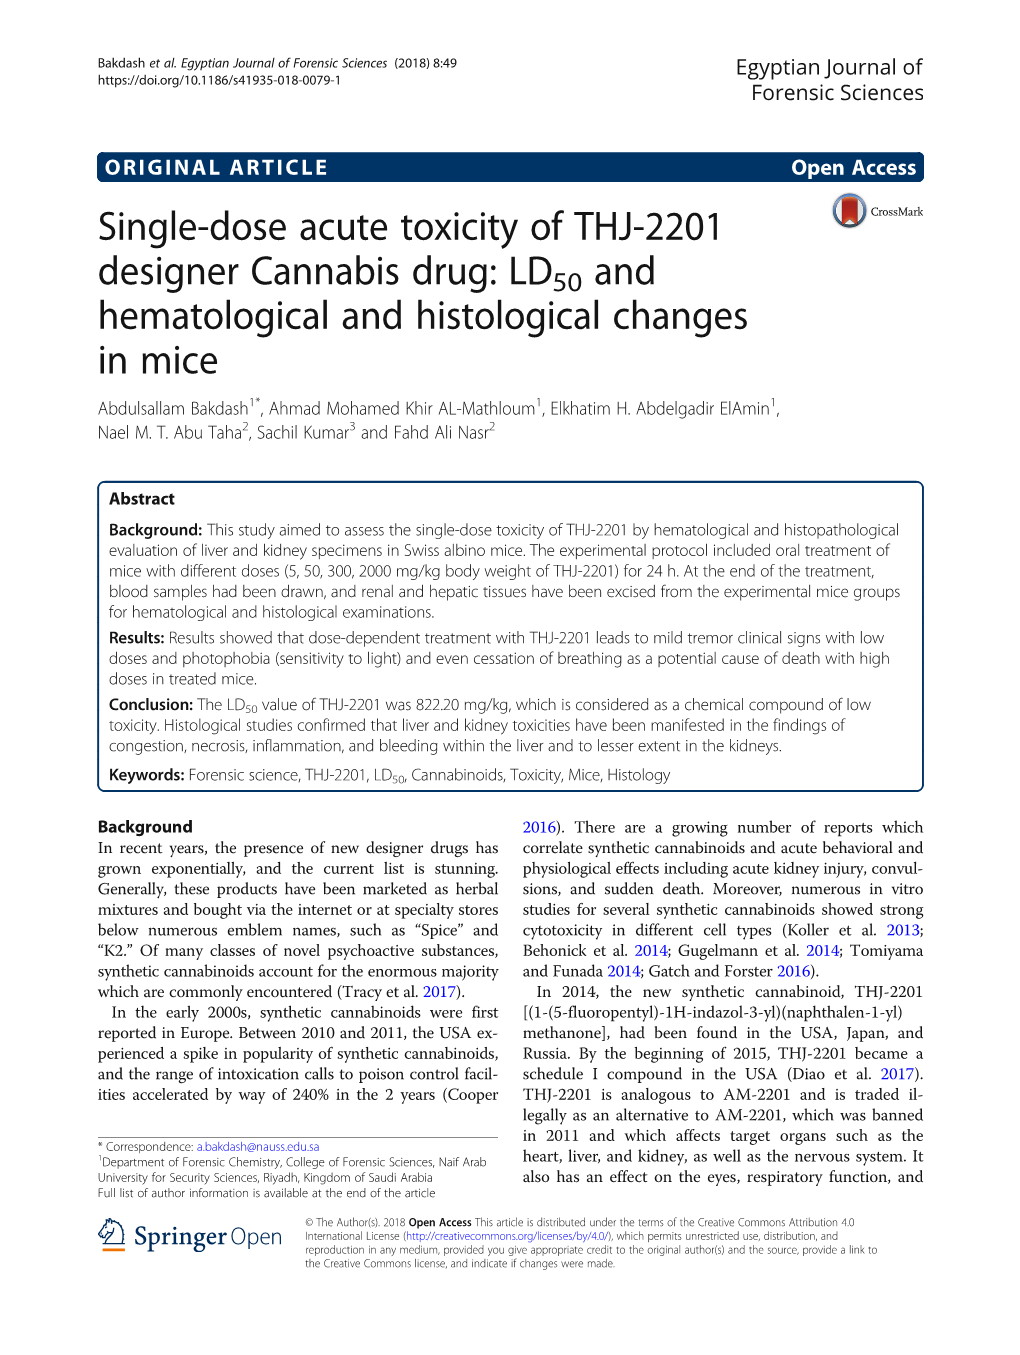 Single-Dose Acute Toxicity of THJ-2201 Designer Cannabis Drug